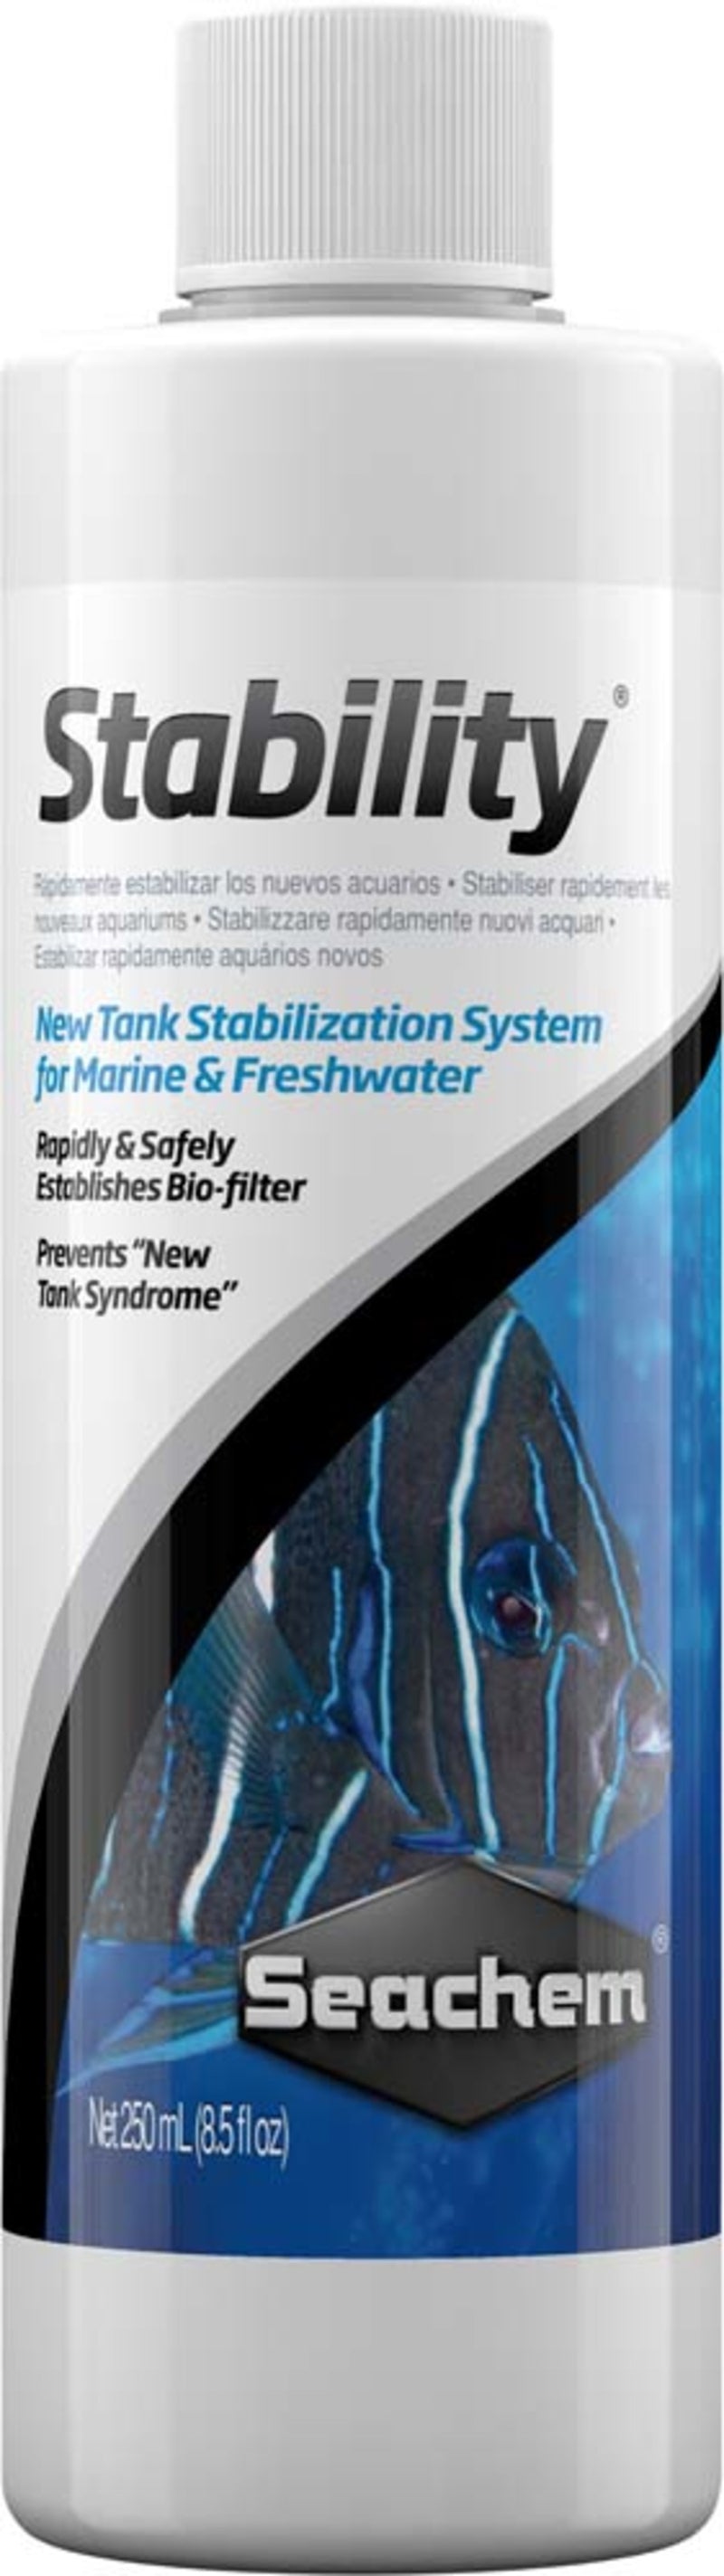 Seachem Laboratories Stability Biological Water Conditioner